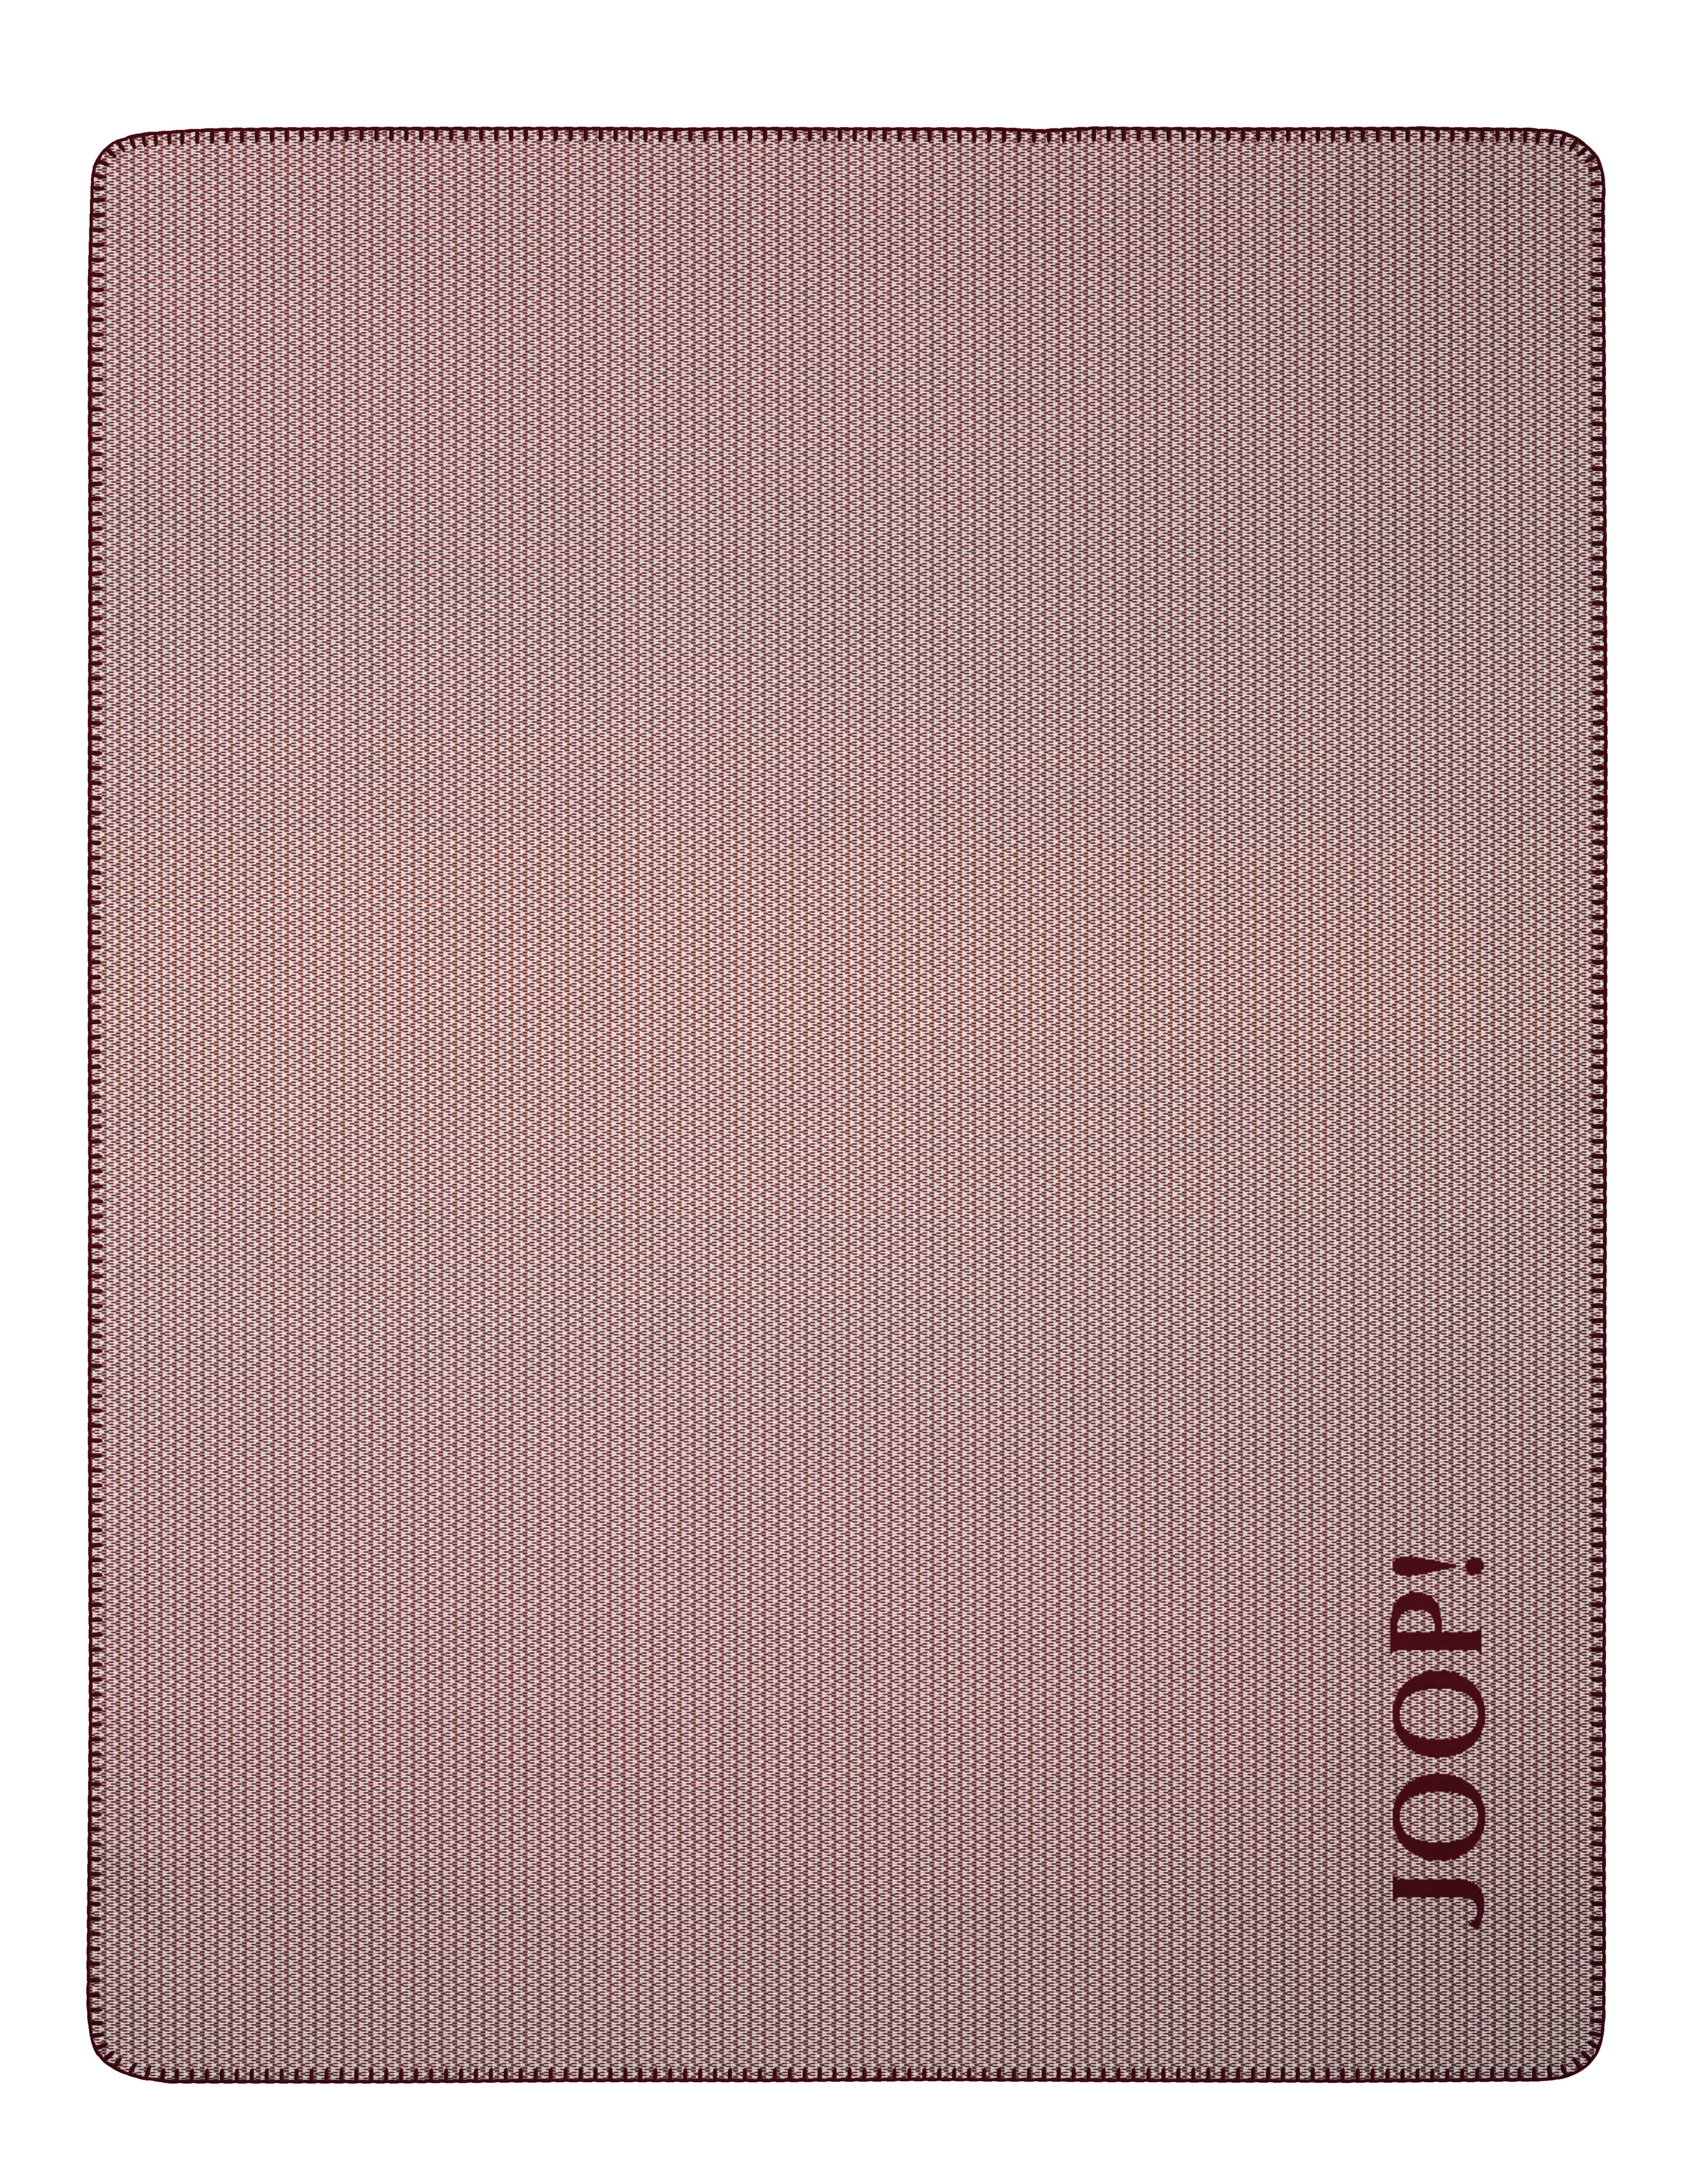 WOHNDECKE Woven 150/200 cm  - Dunkelrot, Design, Textil (150/200cm) - Joop!